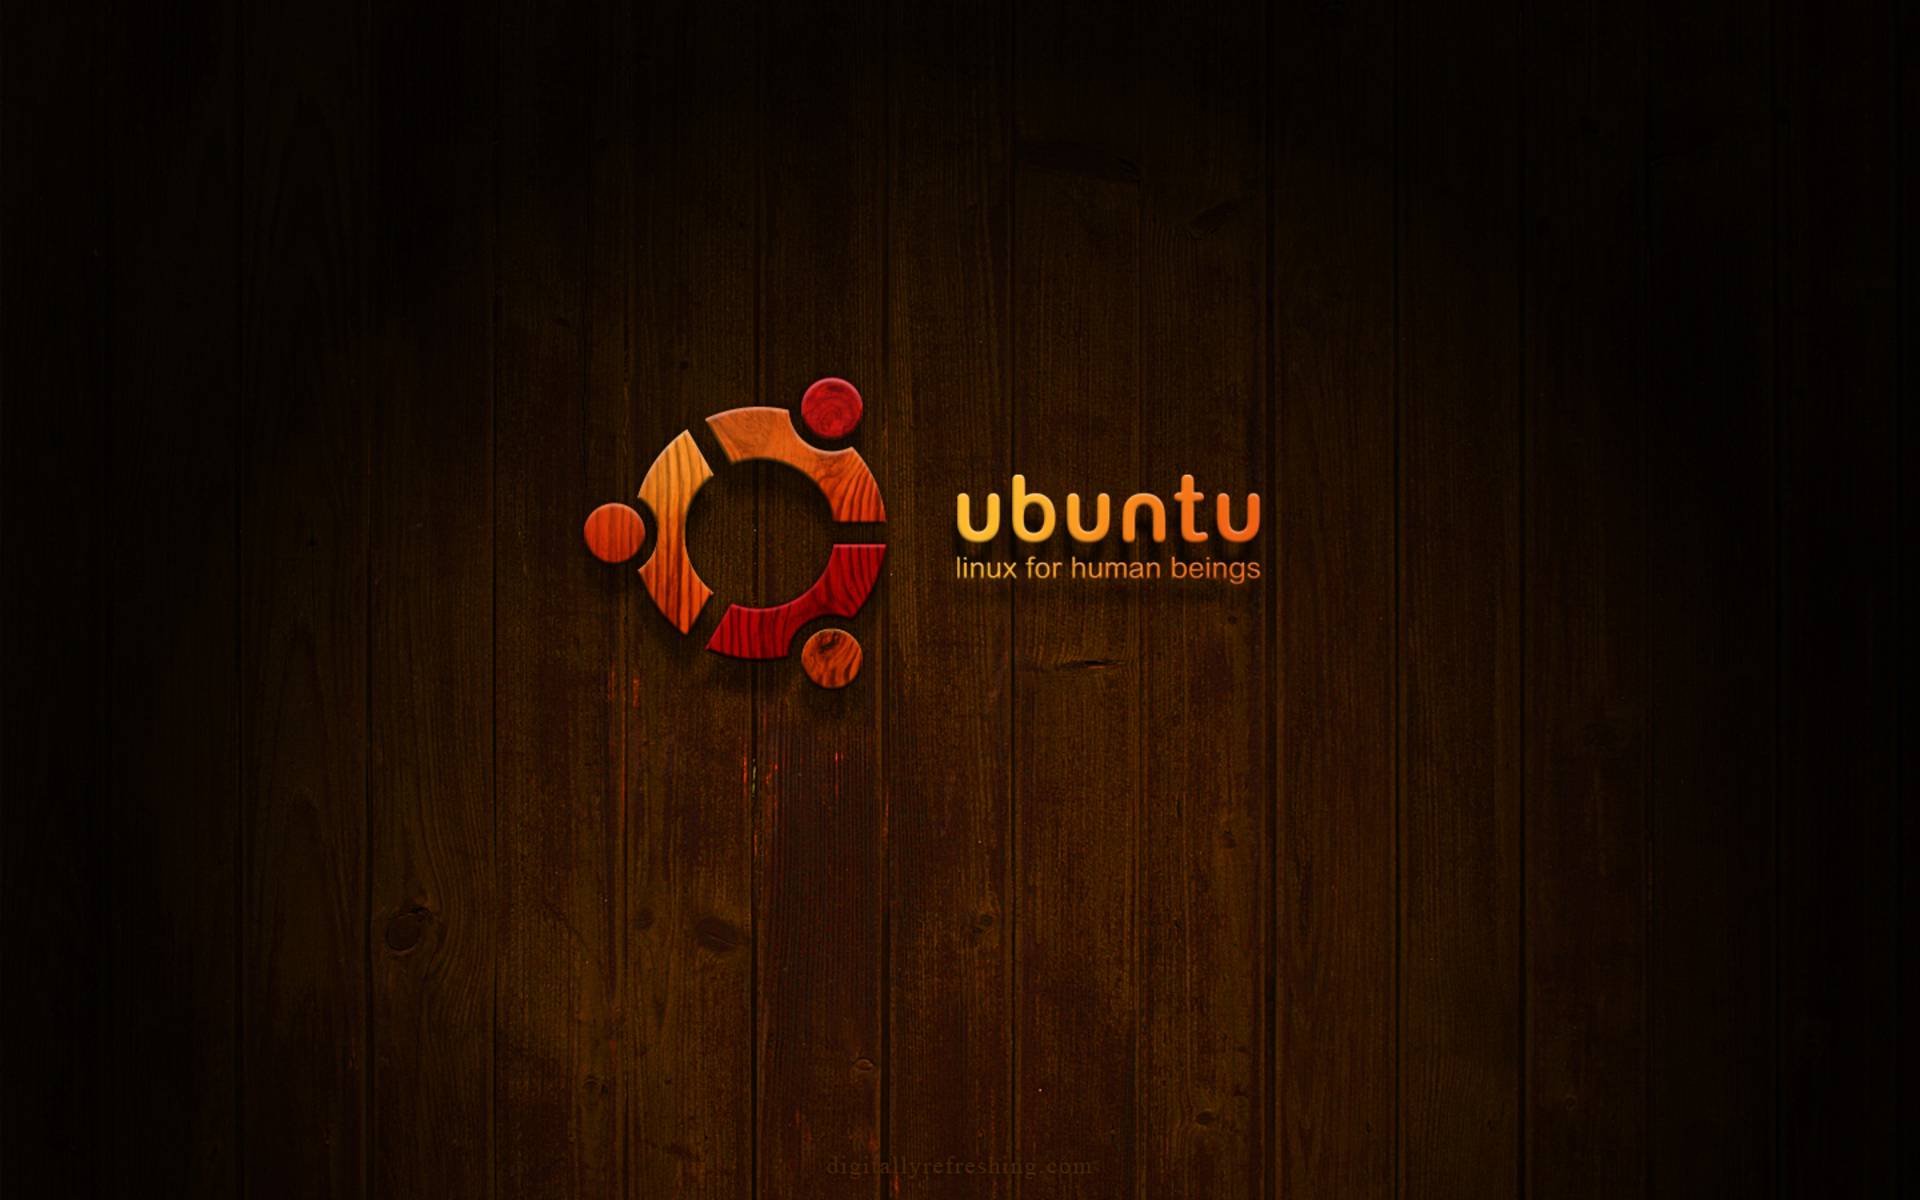 Linux Ubuntu (id: 23168)